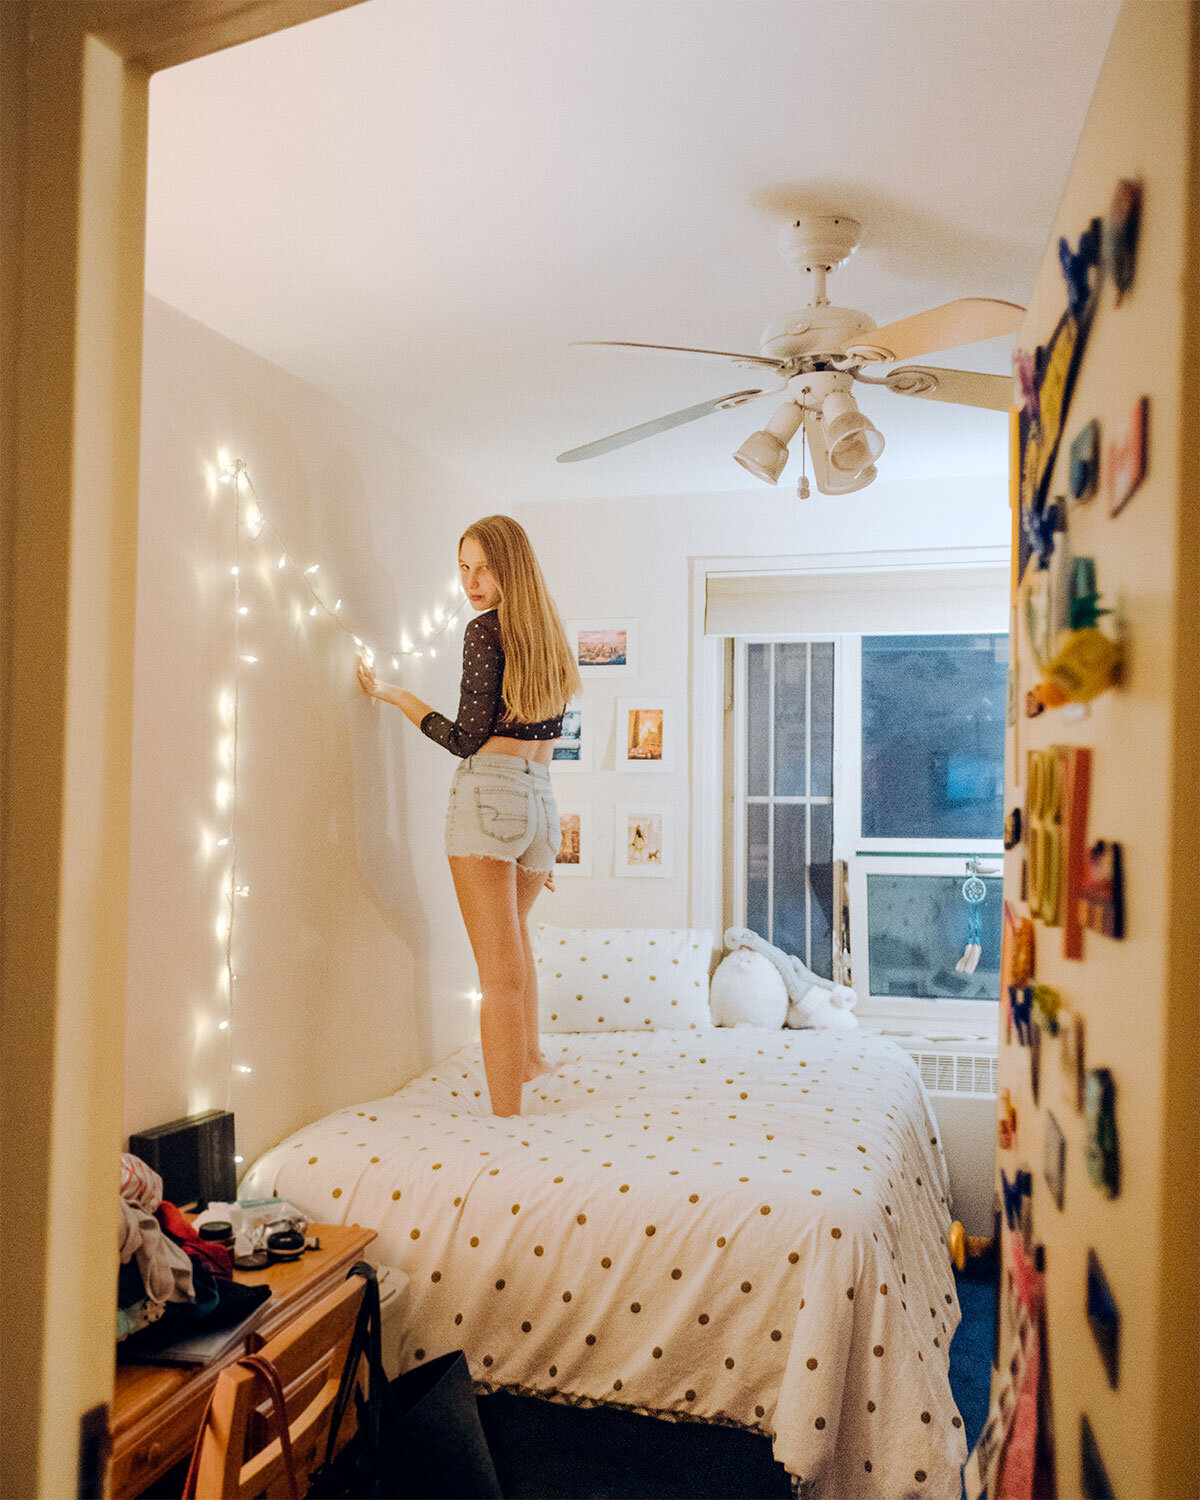 Abby's Room by Megan Leonard